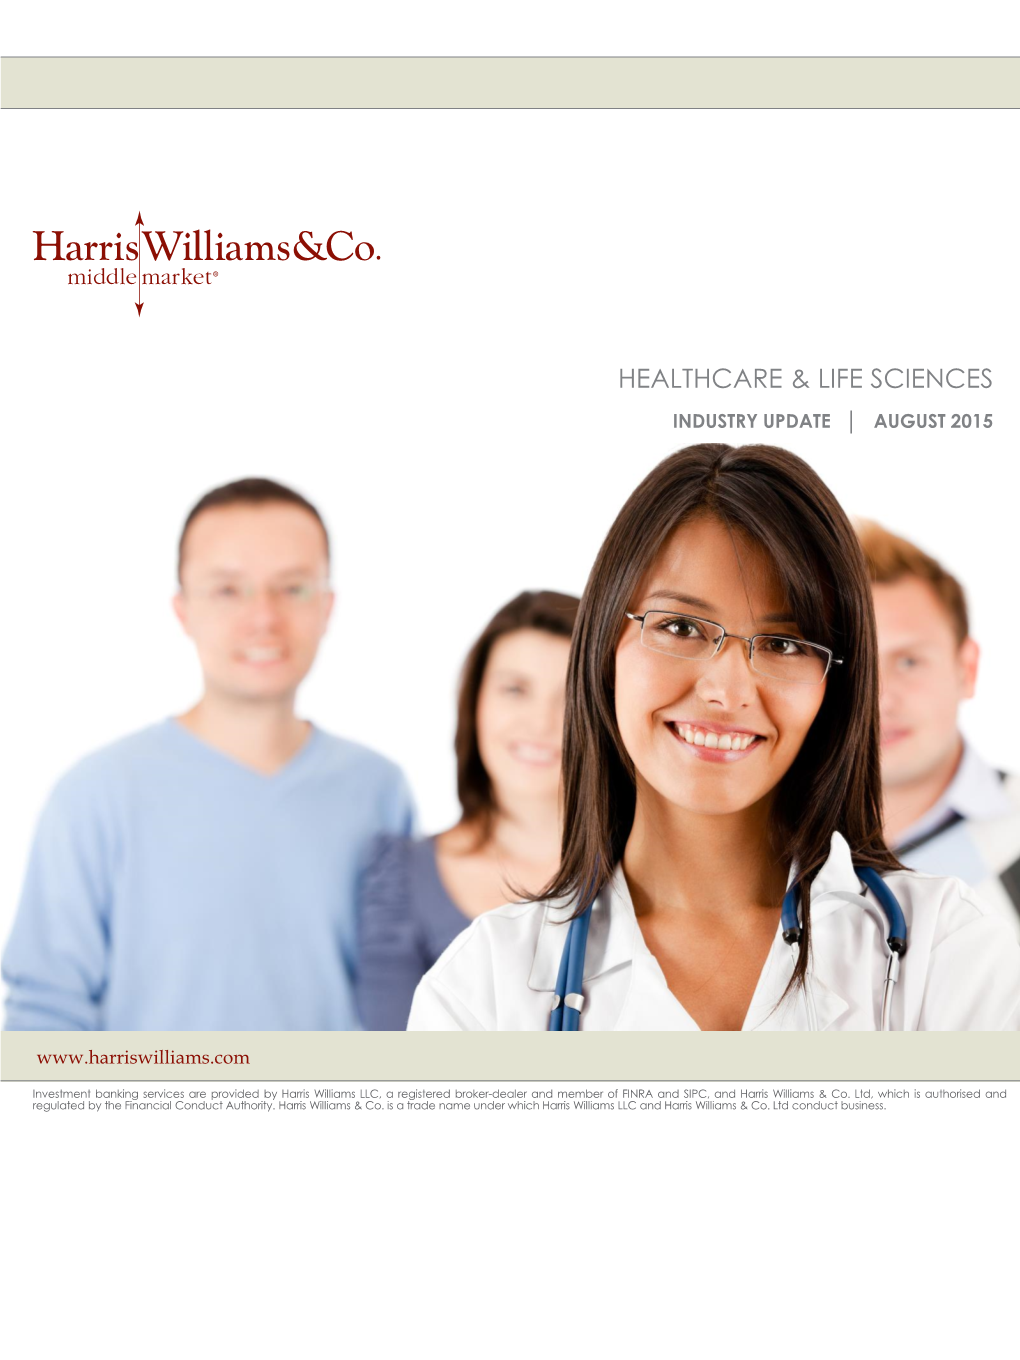 Healthcare & Life Sciences Industry Update